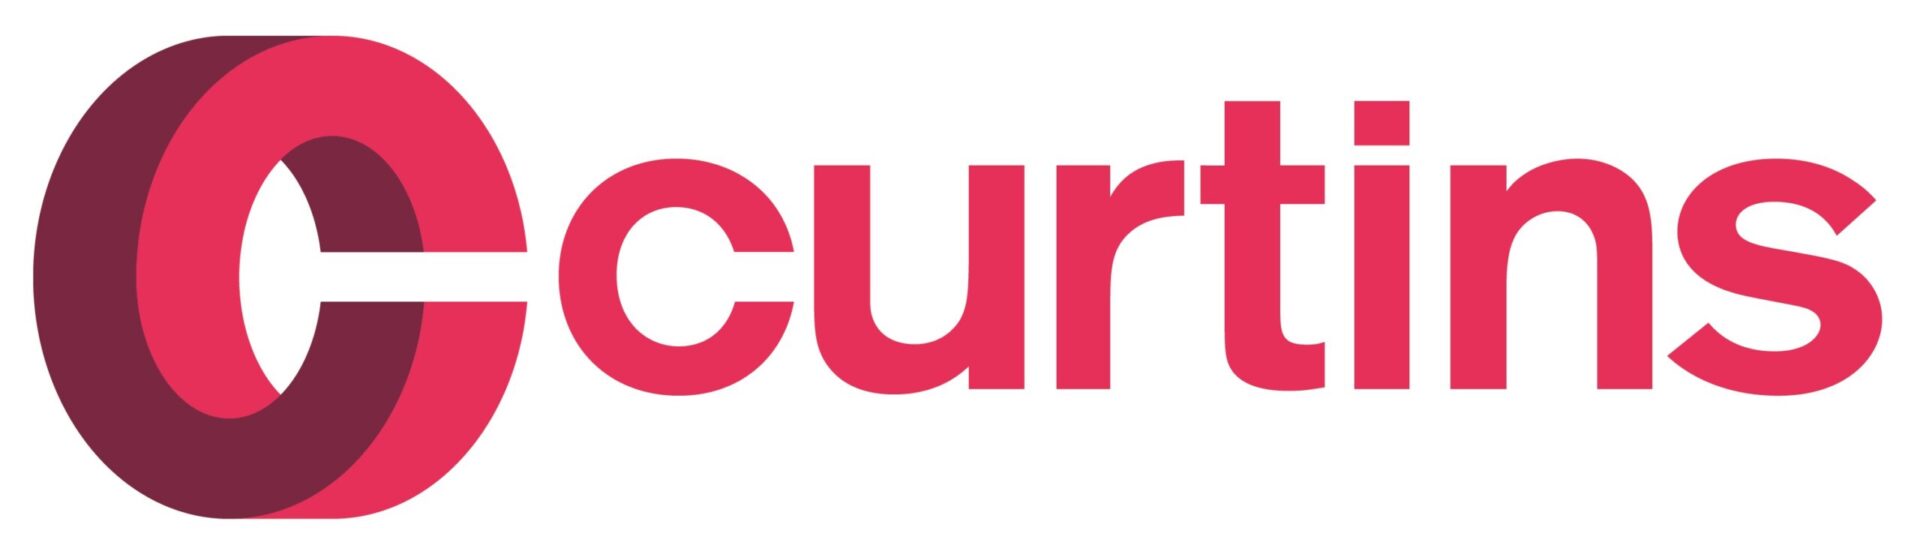 Curtins Logo For Print